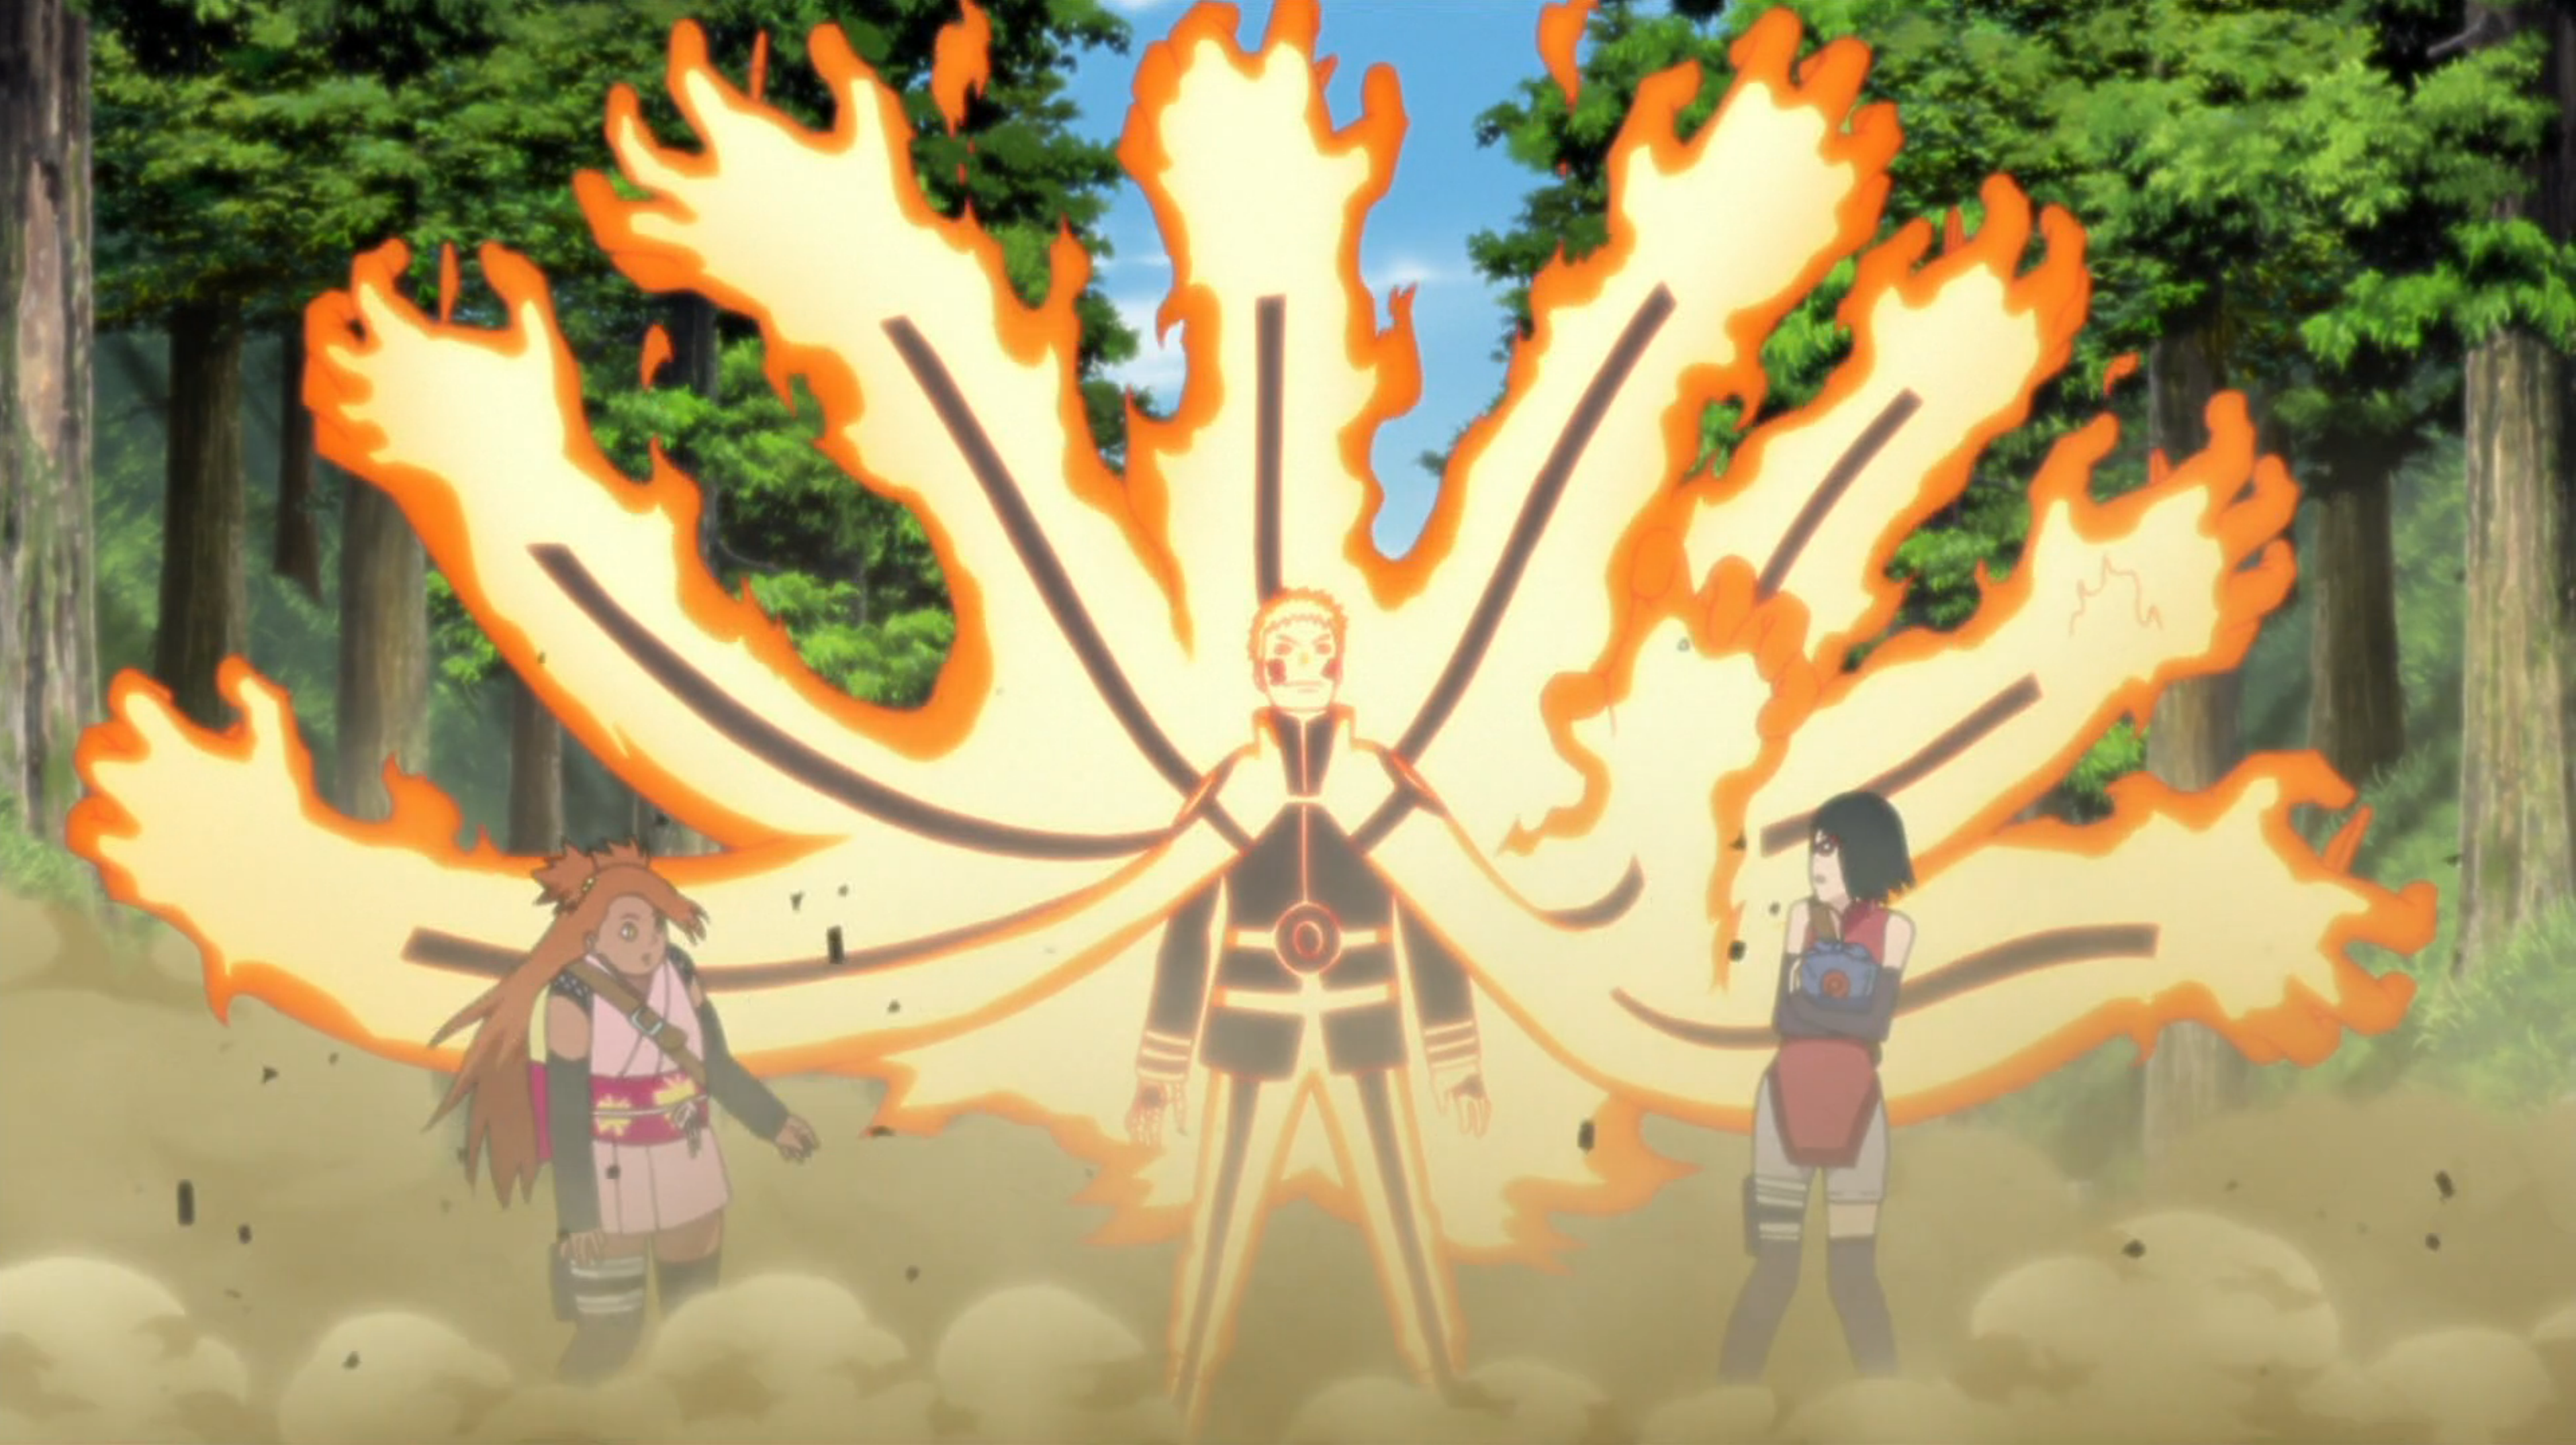 Naruto: The Seventh Hokage and the Scarlet Spring (manga) - Anime